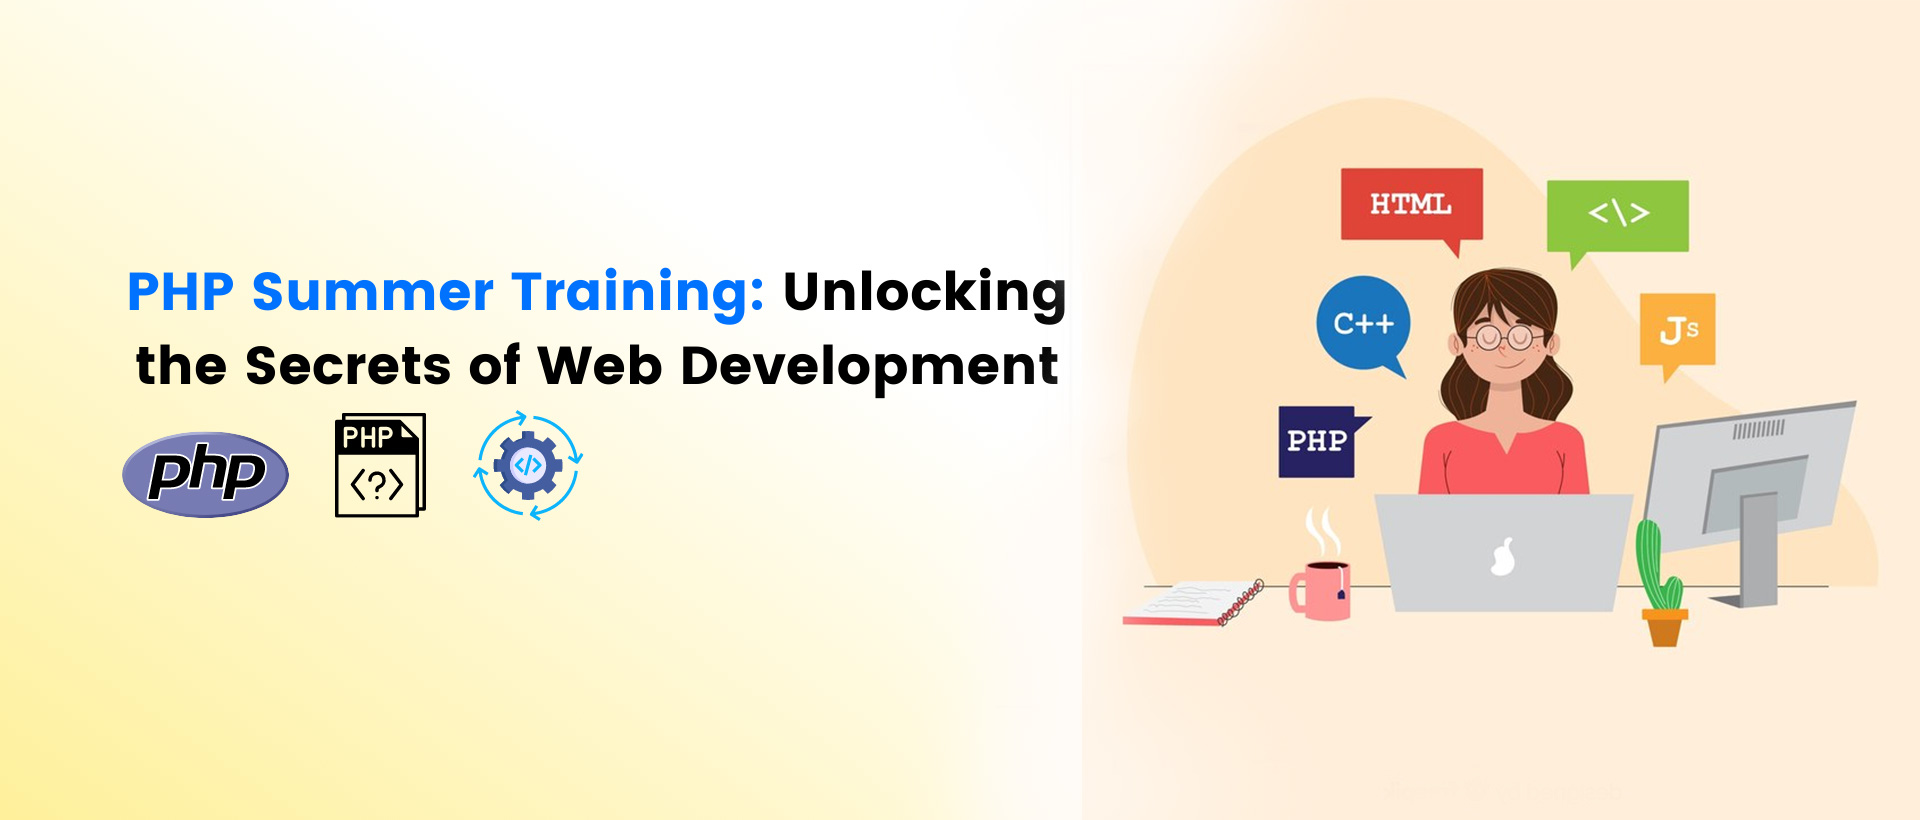 PHP Summer Training: Unlocking the Secrets of Web Development